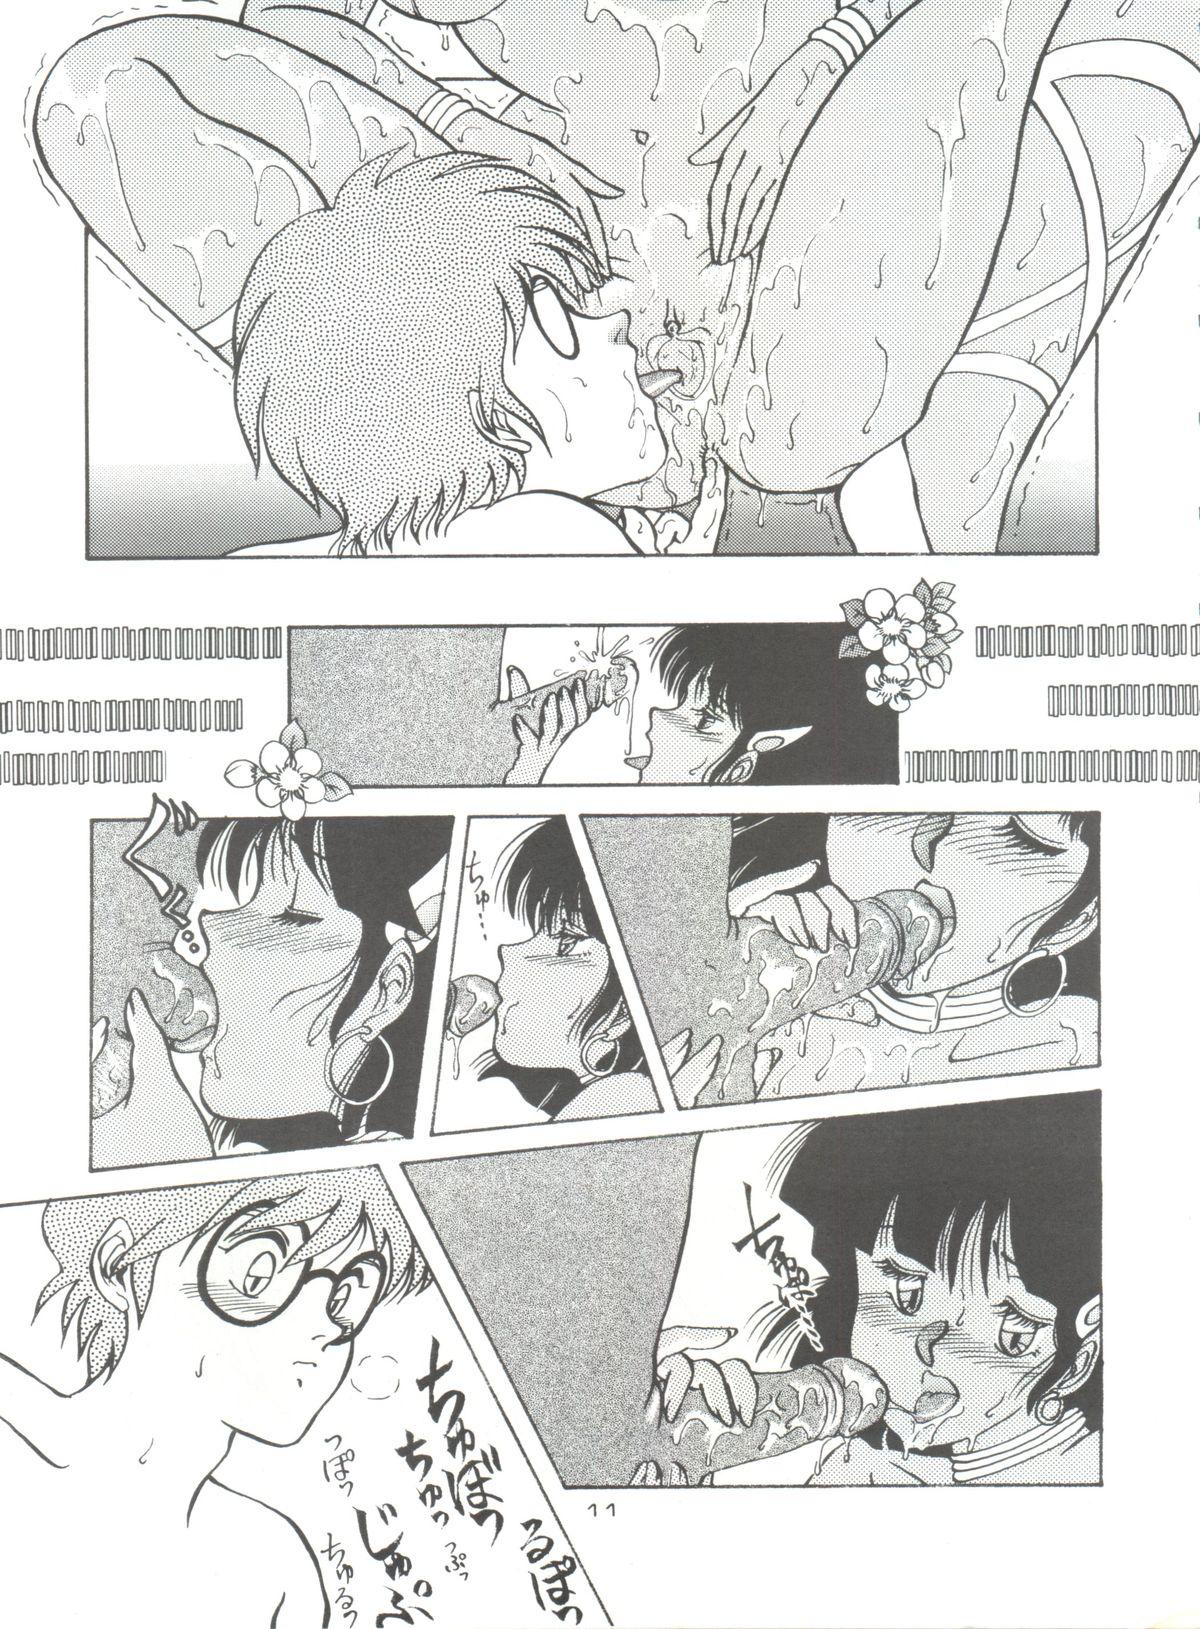 Amature Nadia Girls in Emerald Sea vol. 2 - Minies Club 23 - Fushigi no umi no nadia 1080p - Page 11